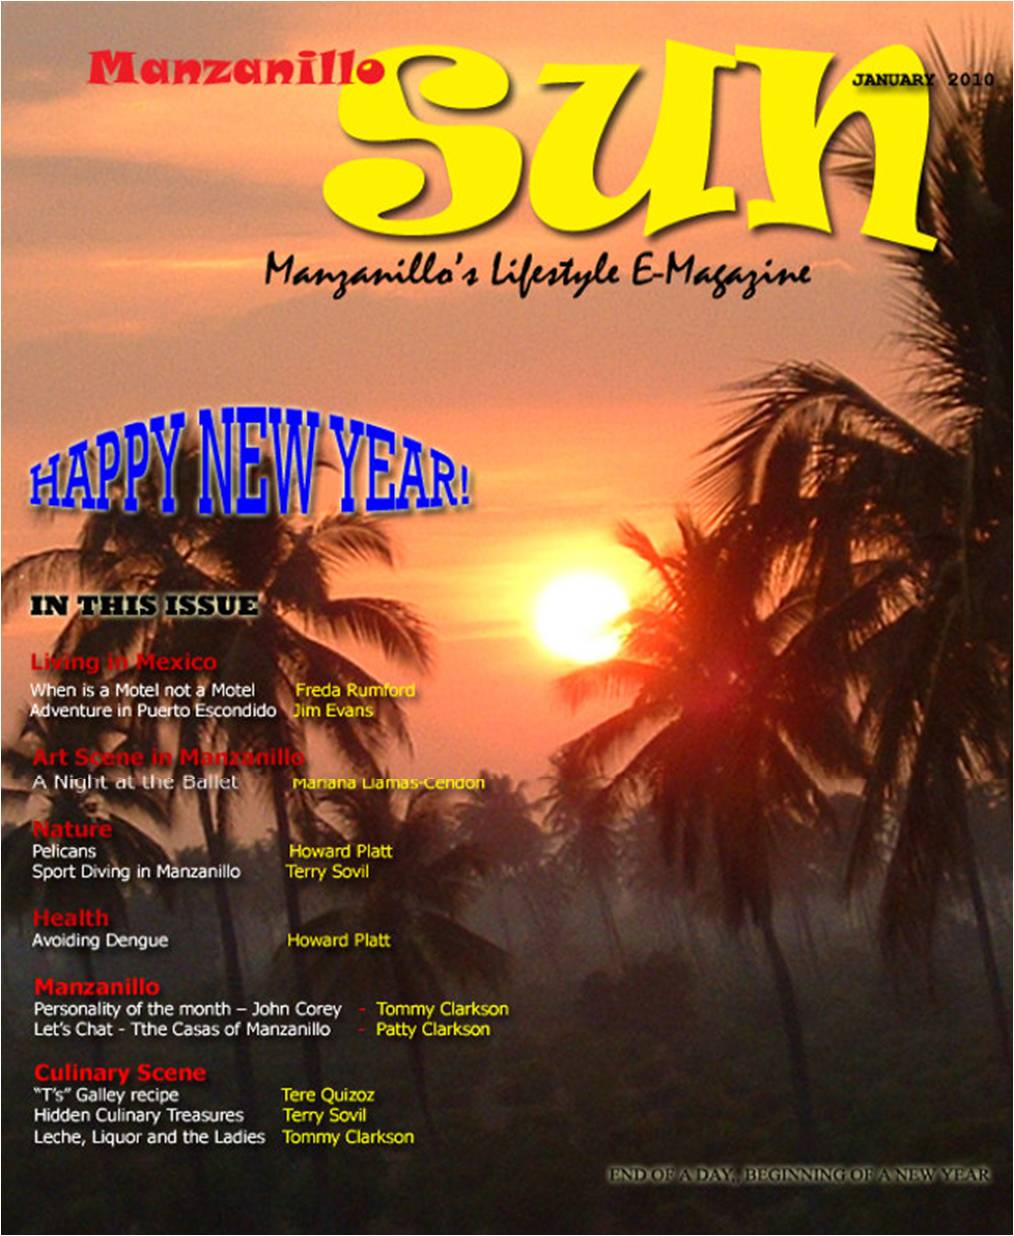 Manzanillo Sun January 2010 cover